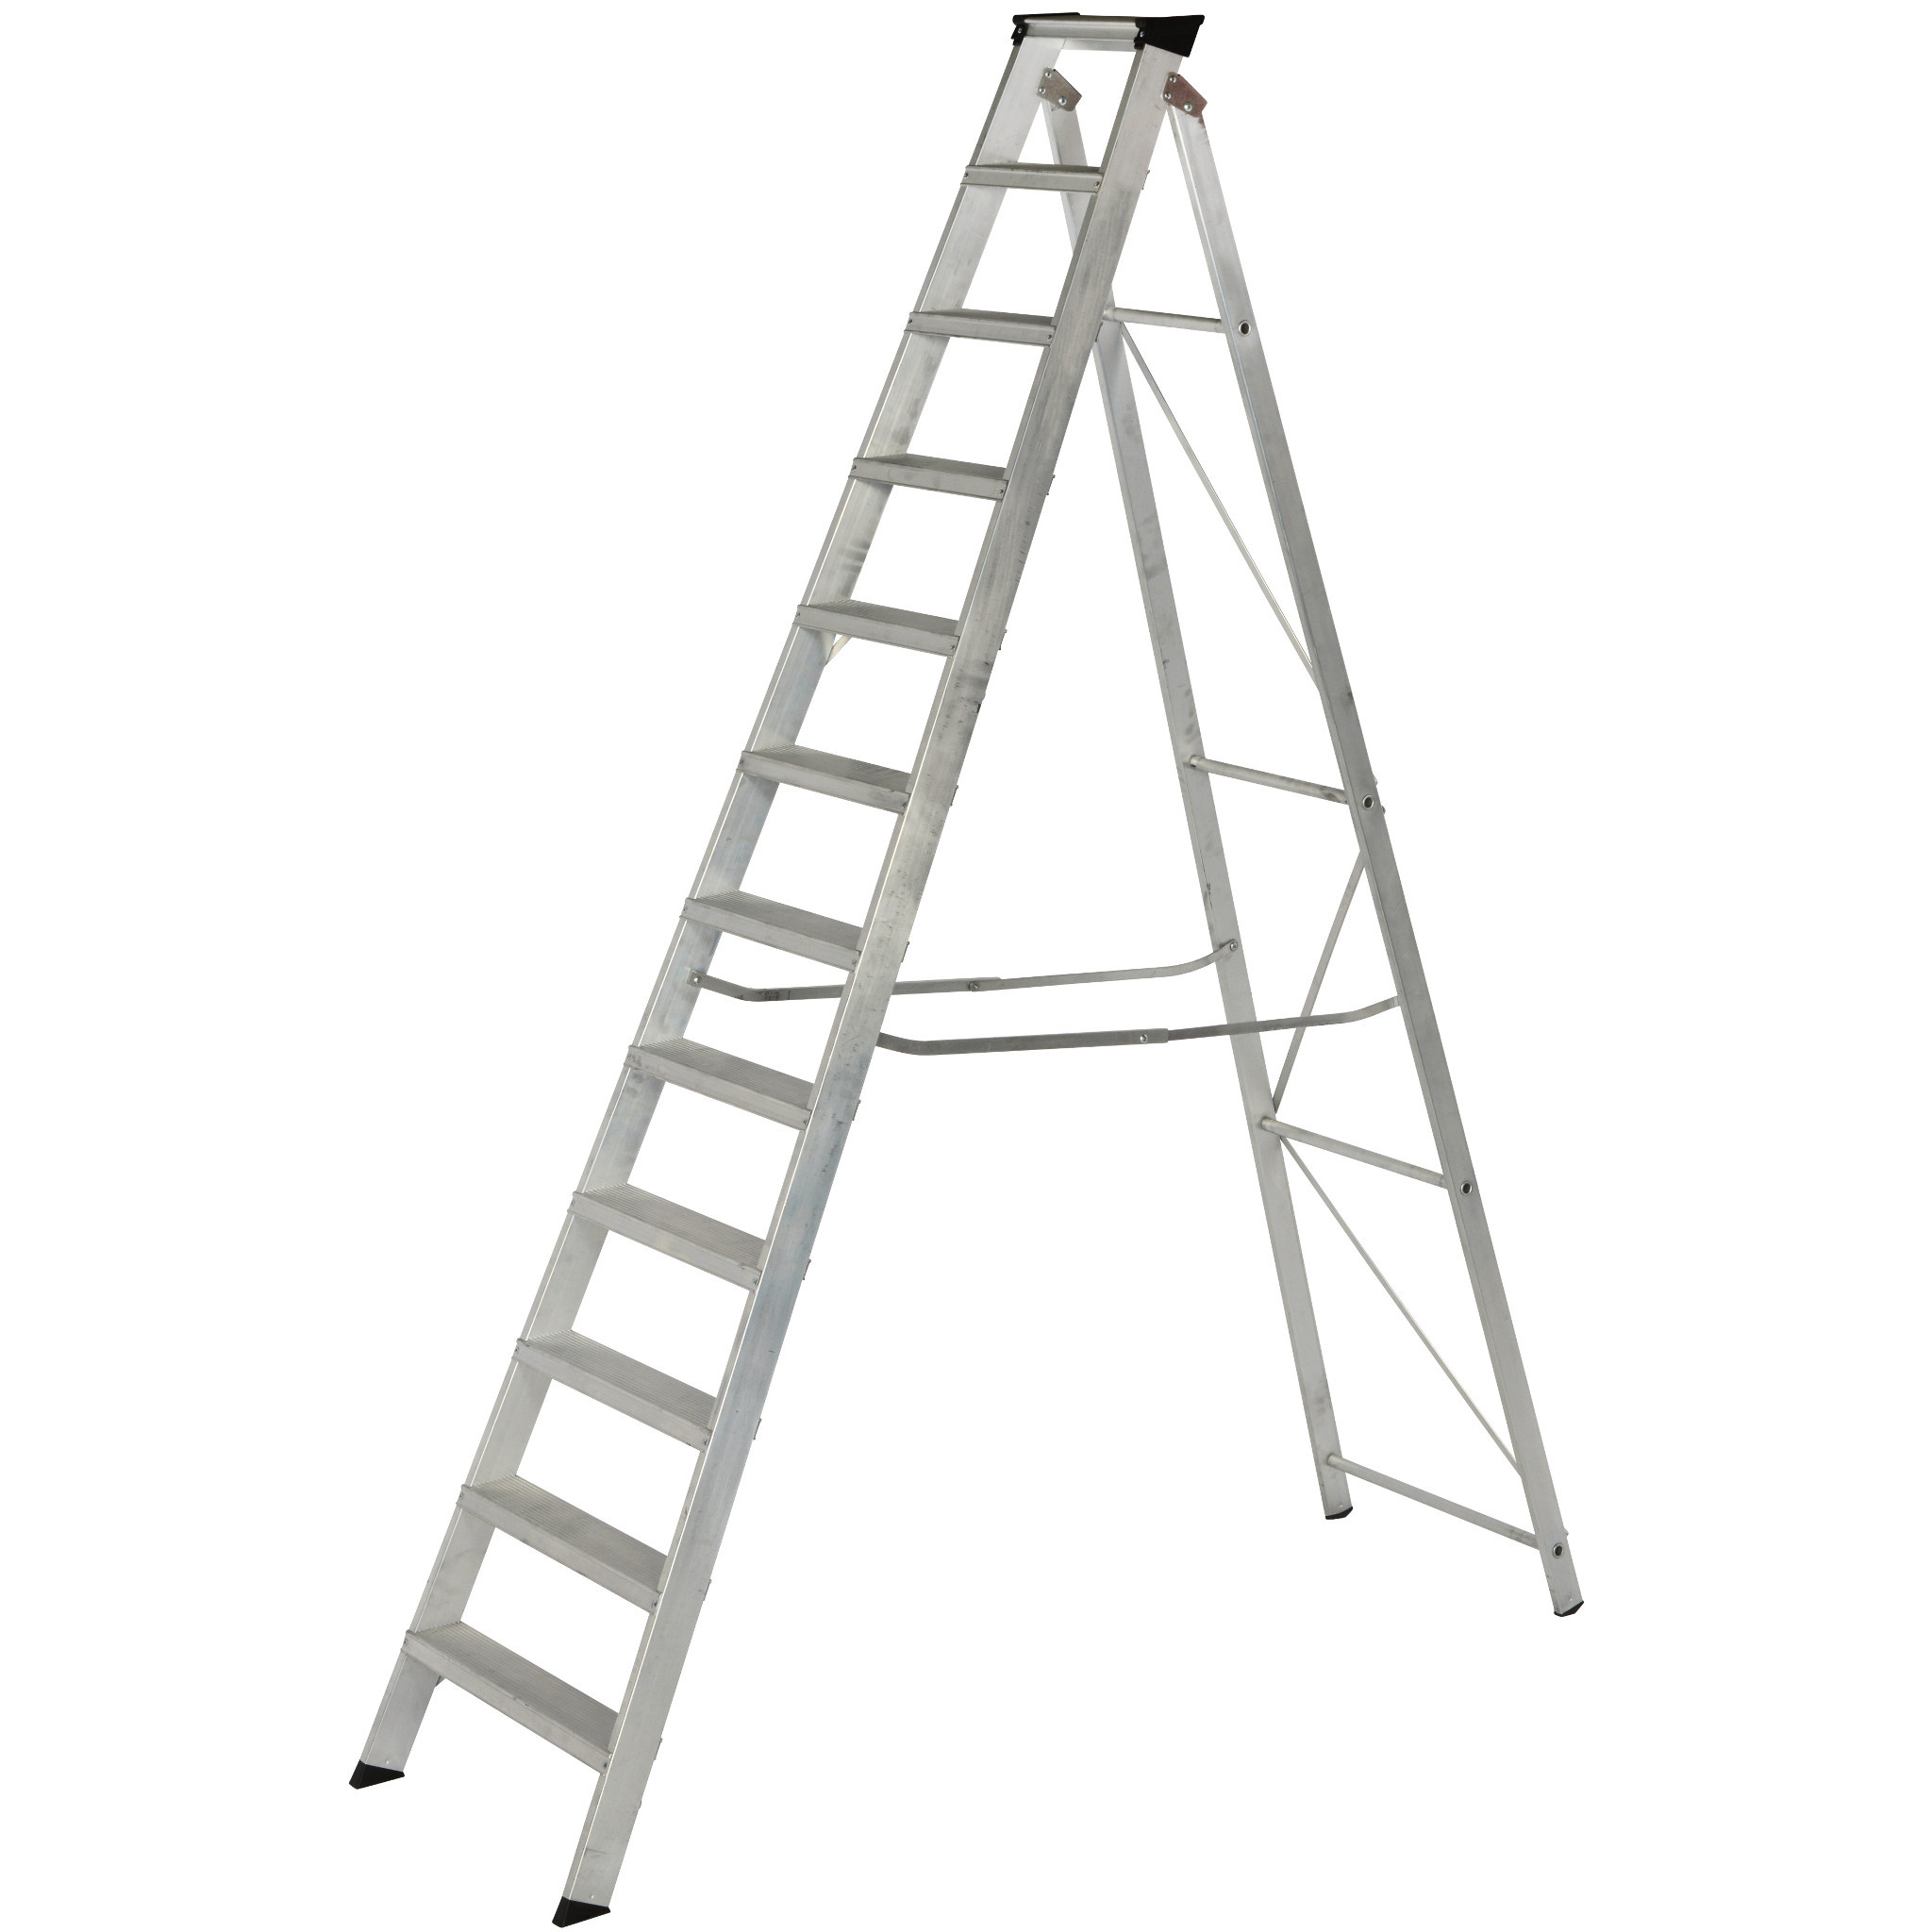 Youngman 5 Tread Class 1 Alloy Builders Step Ladder Aluminium Tradex Tools Ltd Special